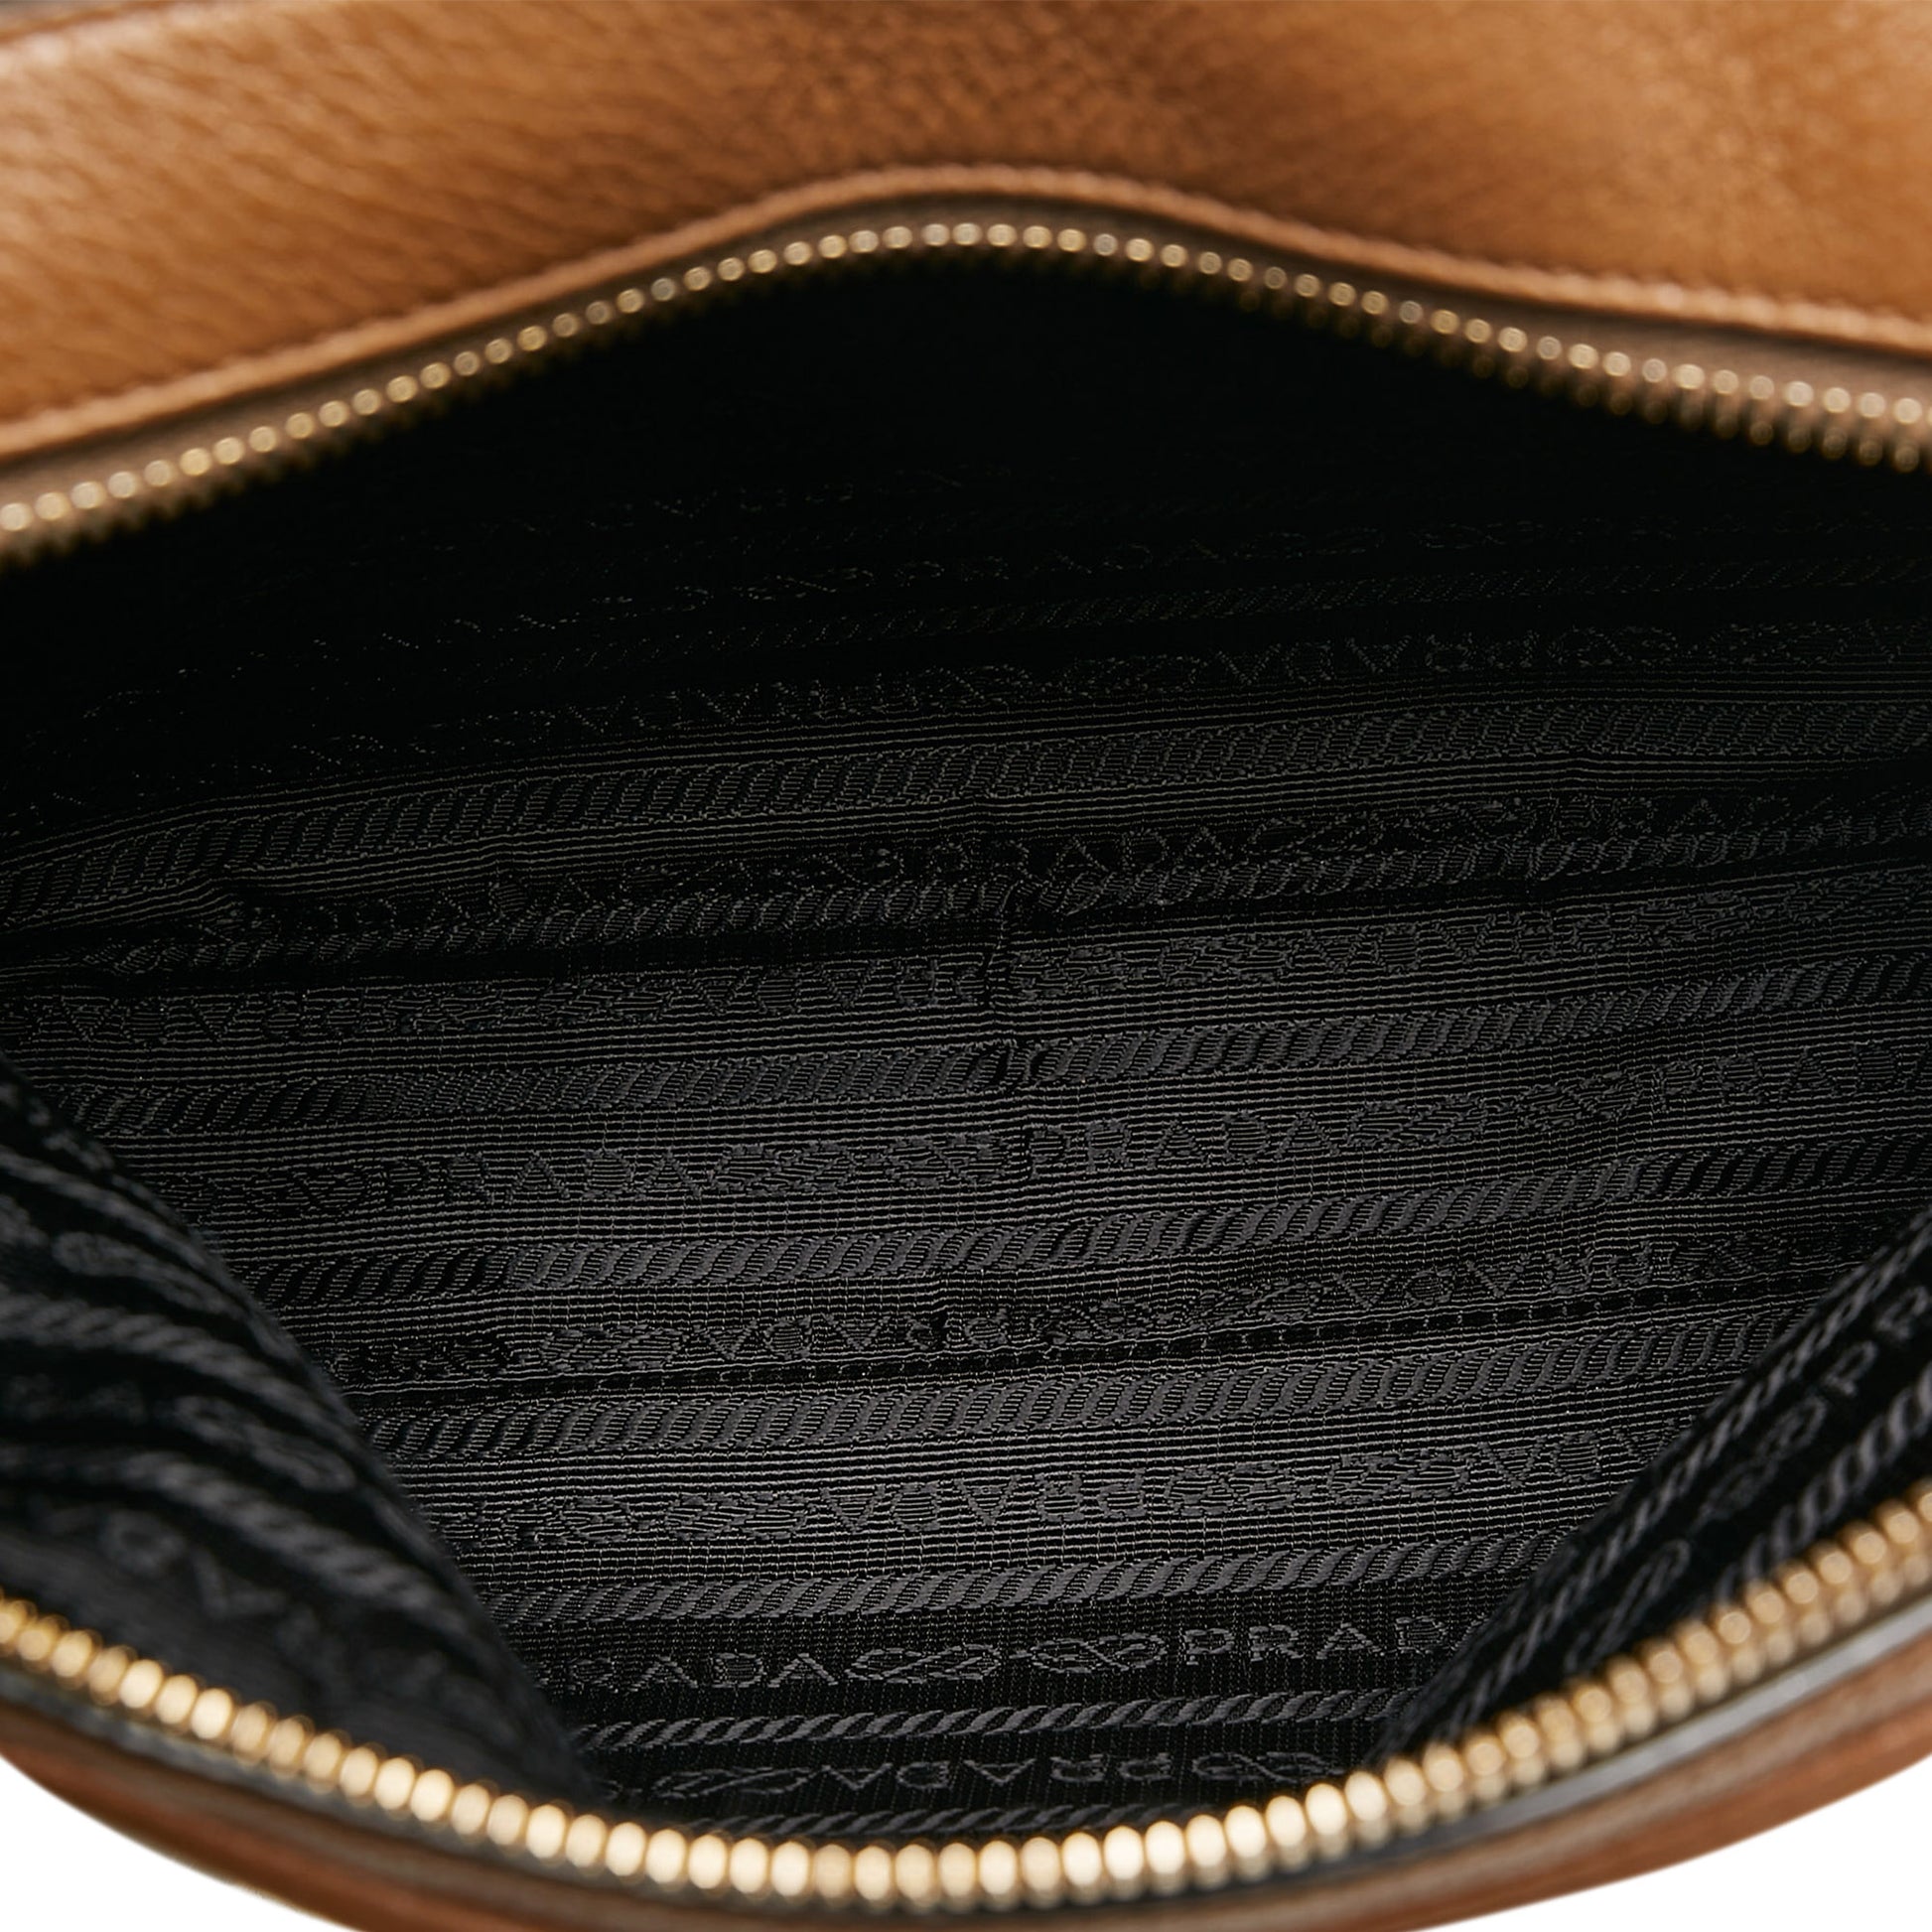 PRADA Vitello Phenix Bag — Seams to Fit Women's Consignment